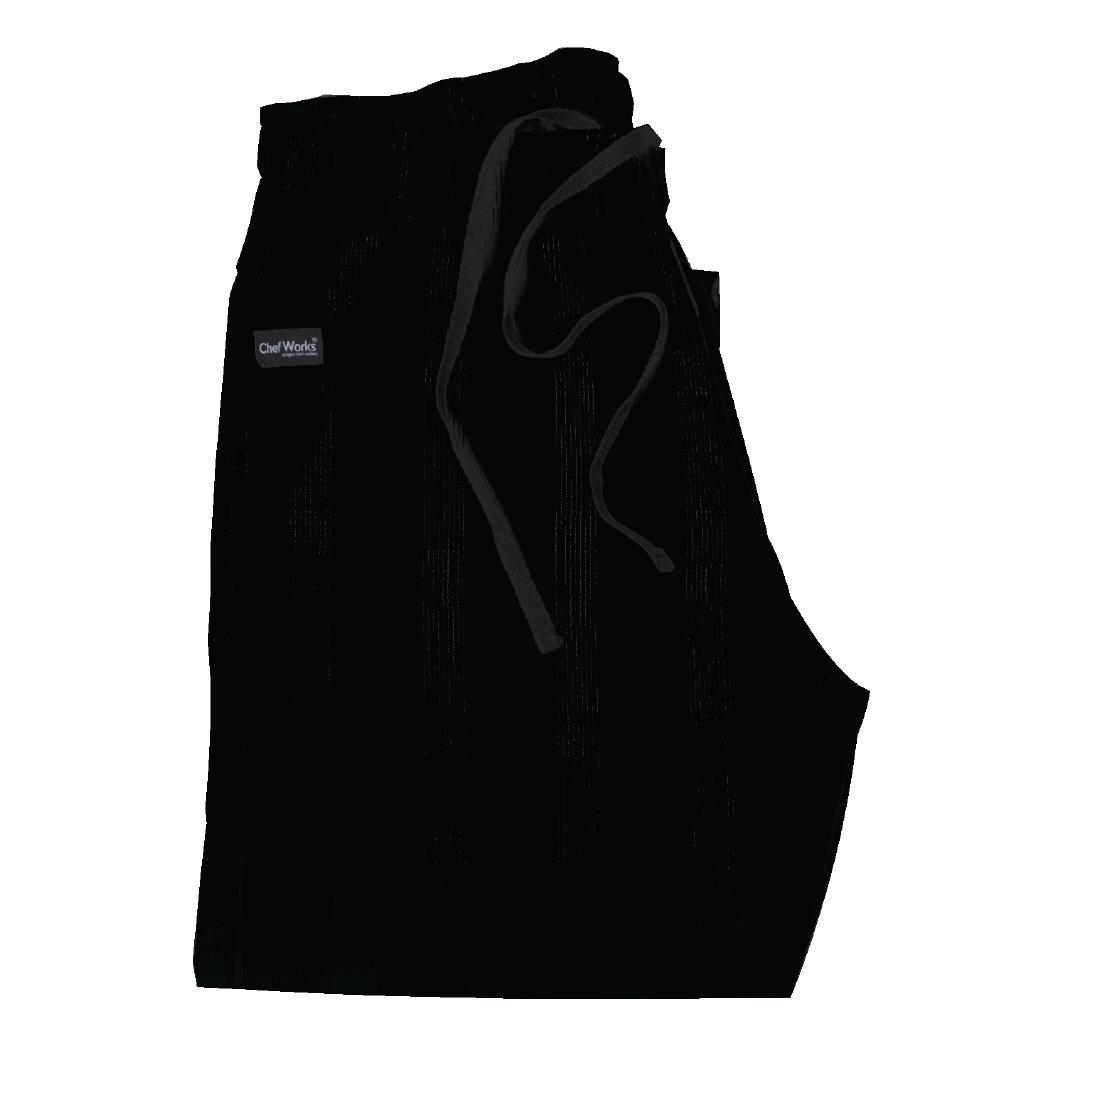 Chef Works Unisex Better Built Baggy Chefs Trousers Black L - A695-L  - 3